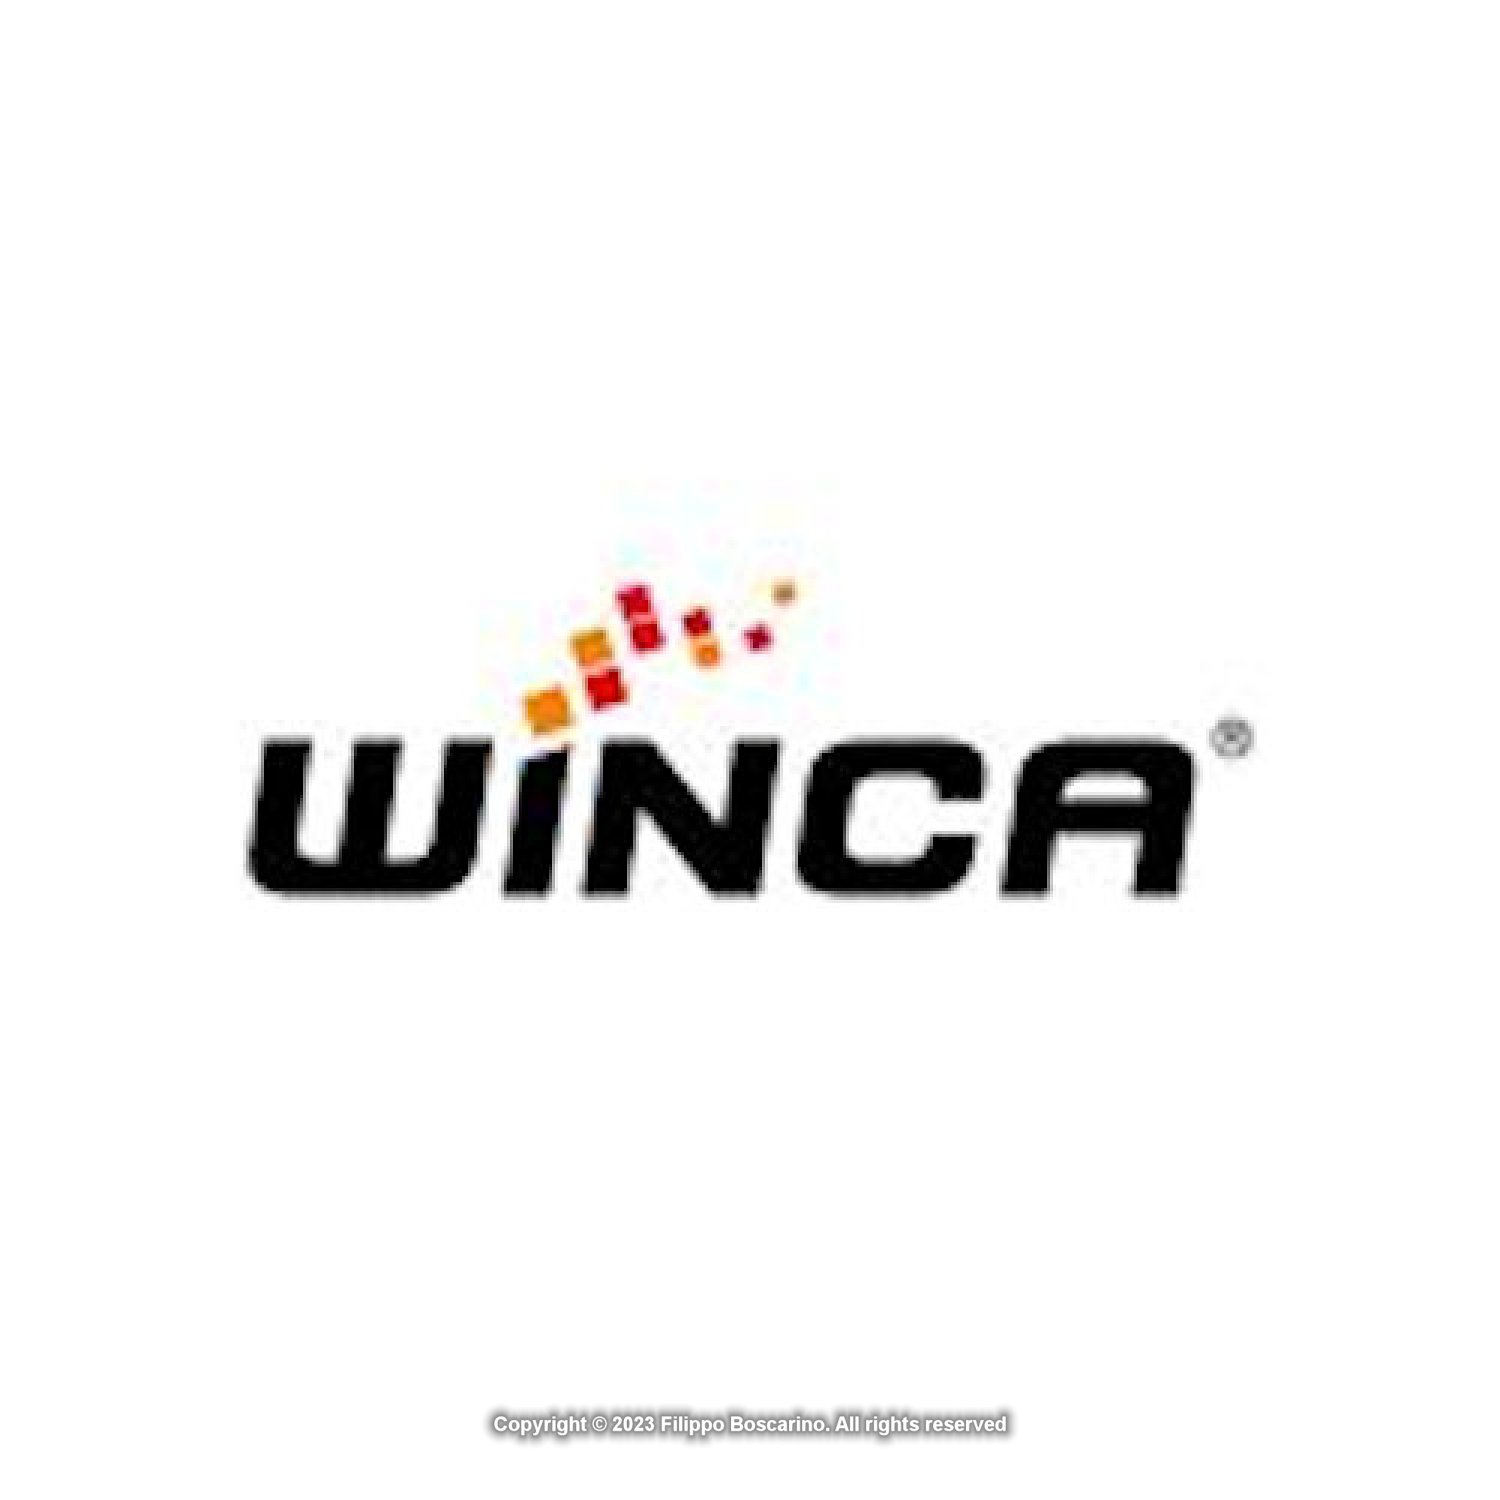 application_winca